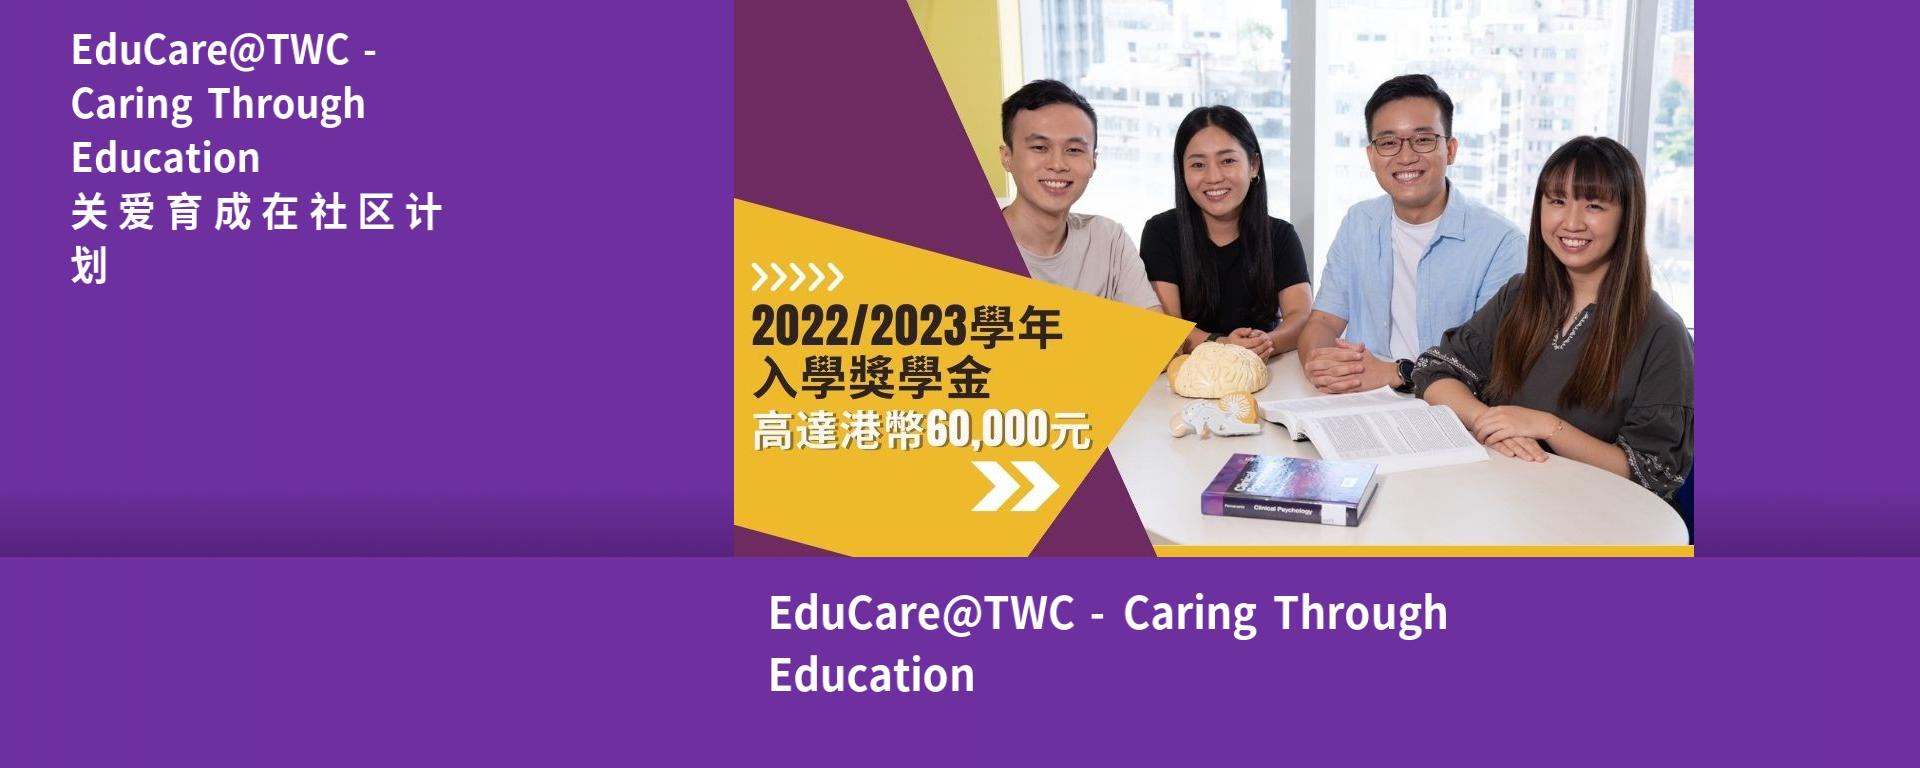 EduCare@TWC - Caring Through Education 關愛育成在社區計劃